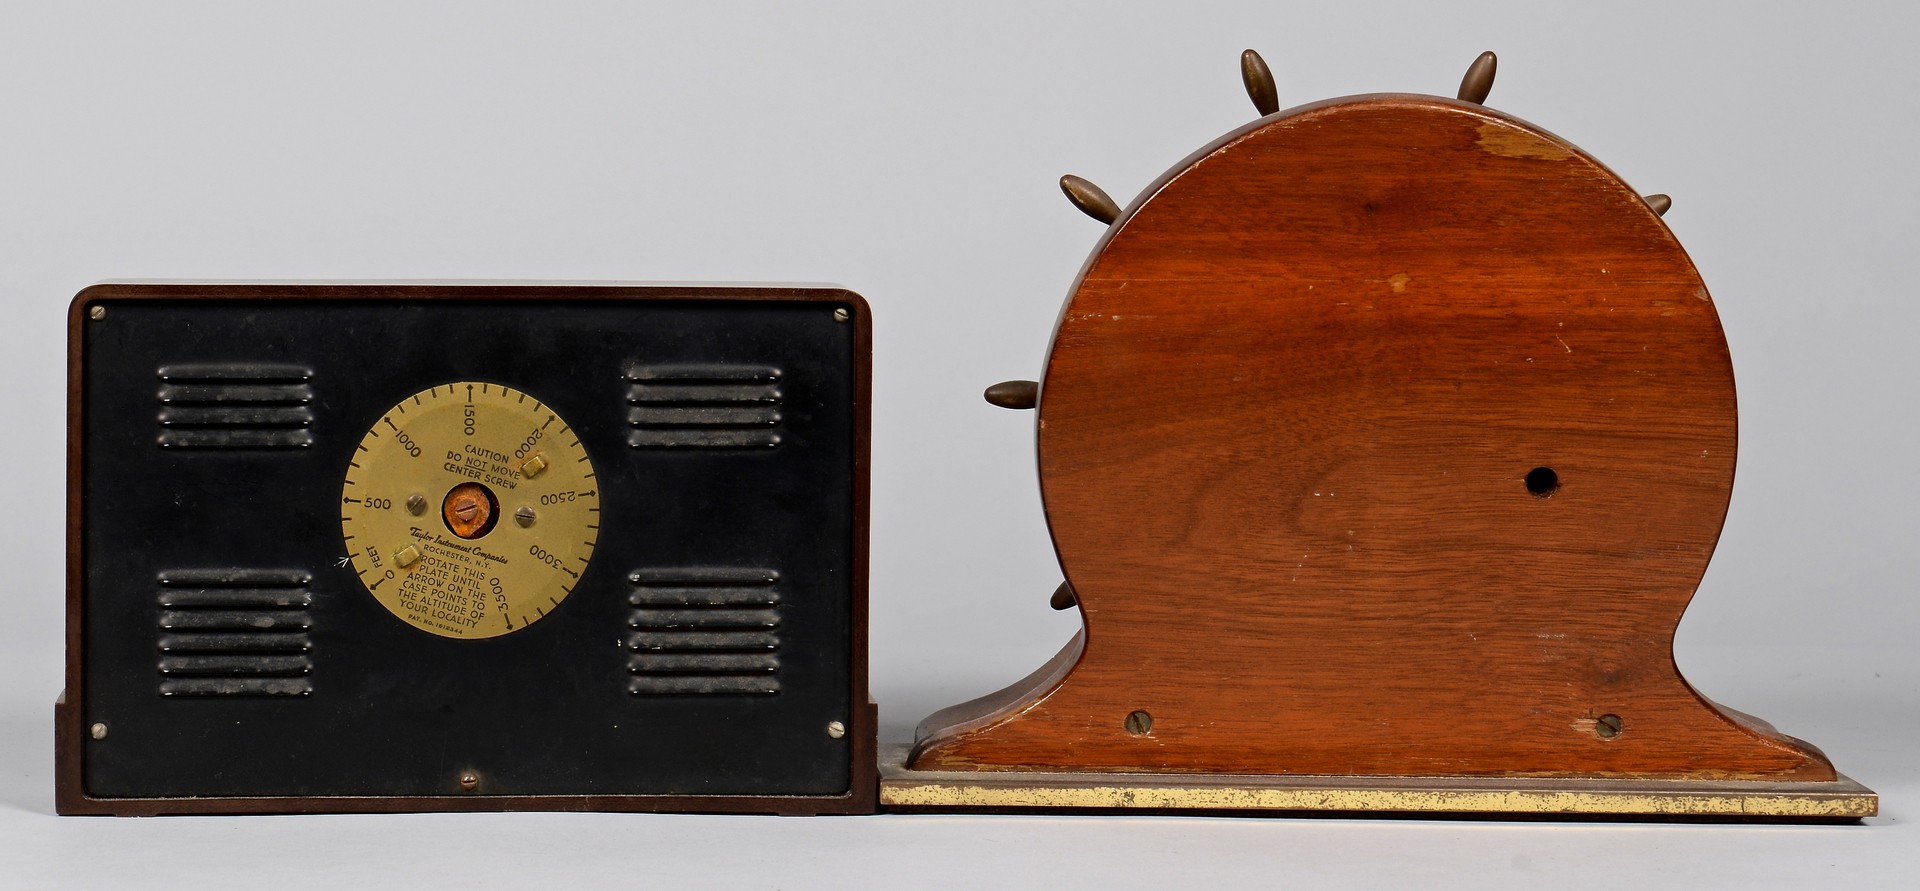 Lot 613: Vintage Barometers, Thermometers, 7 pcs.